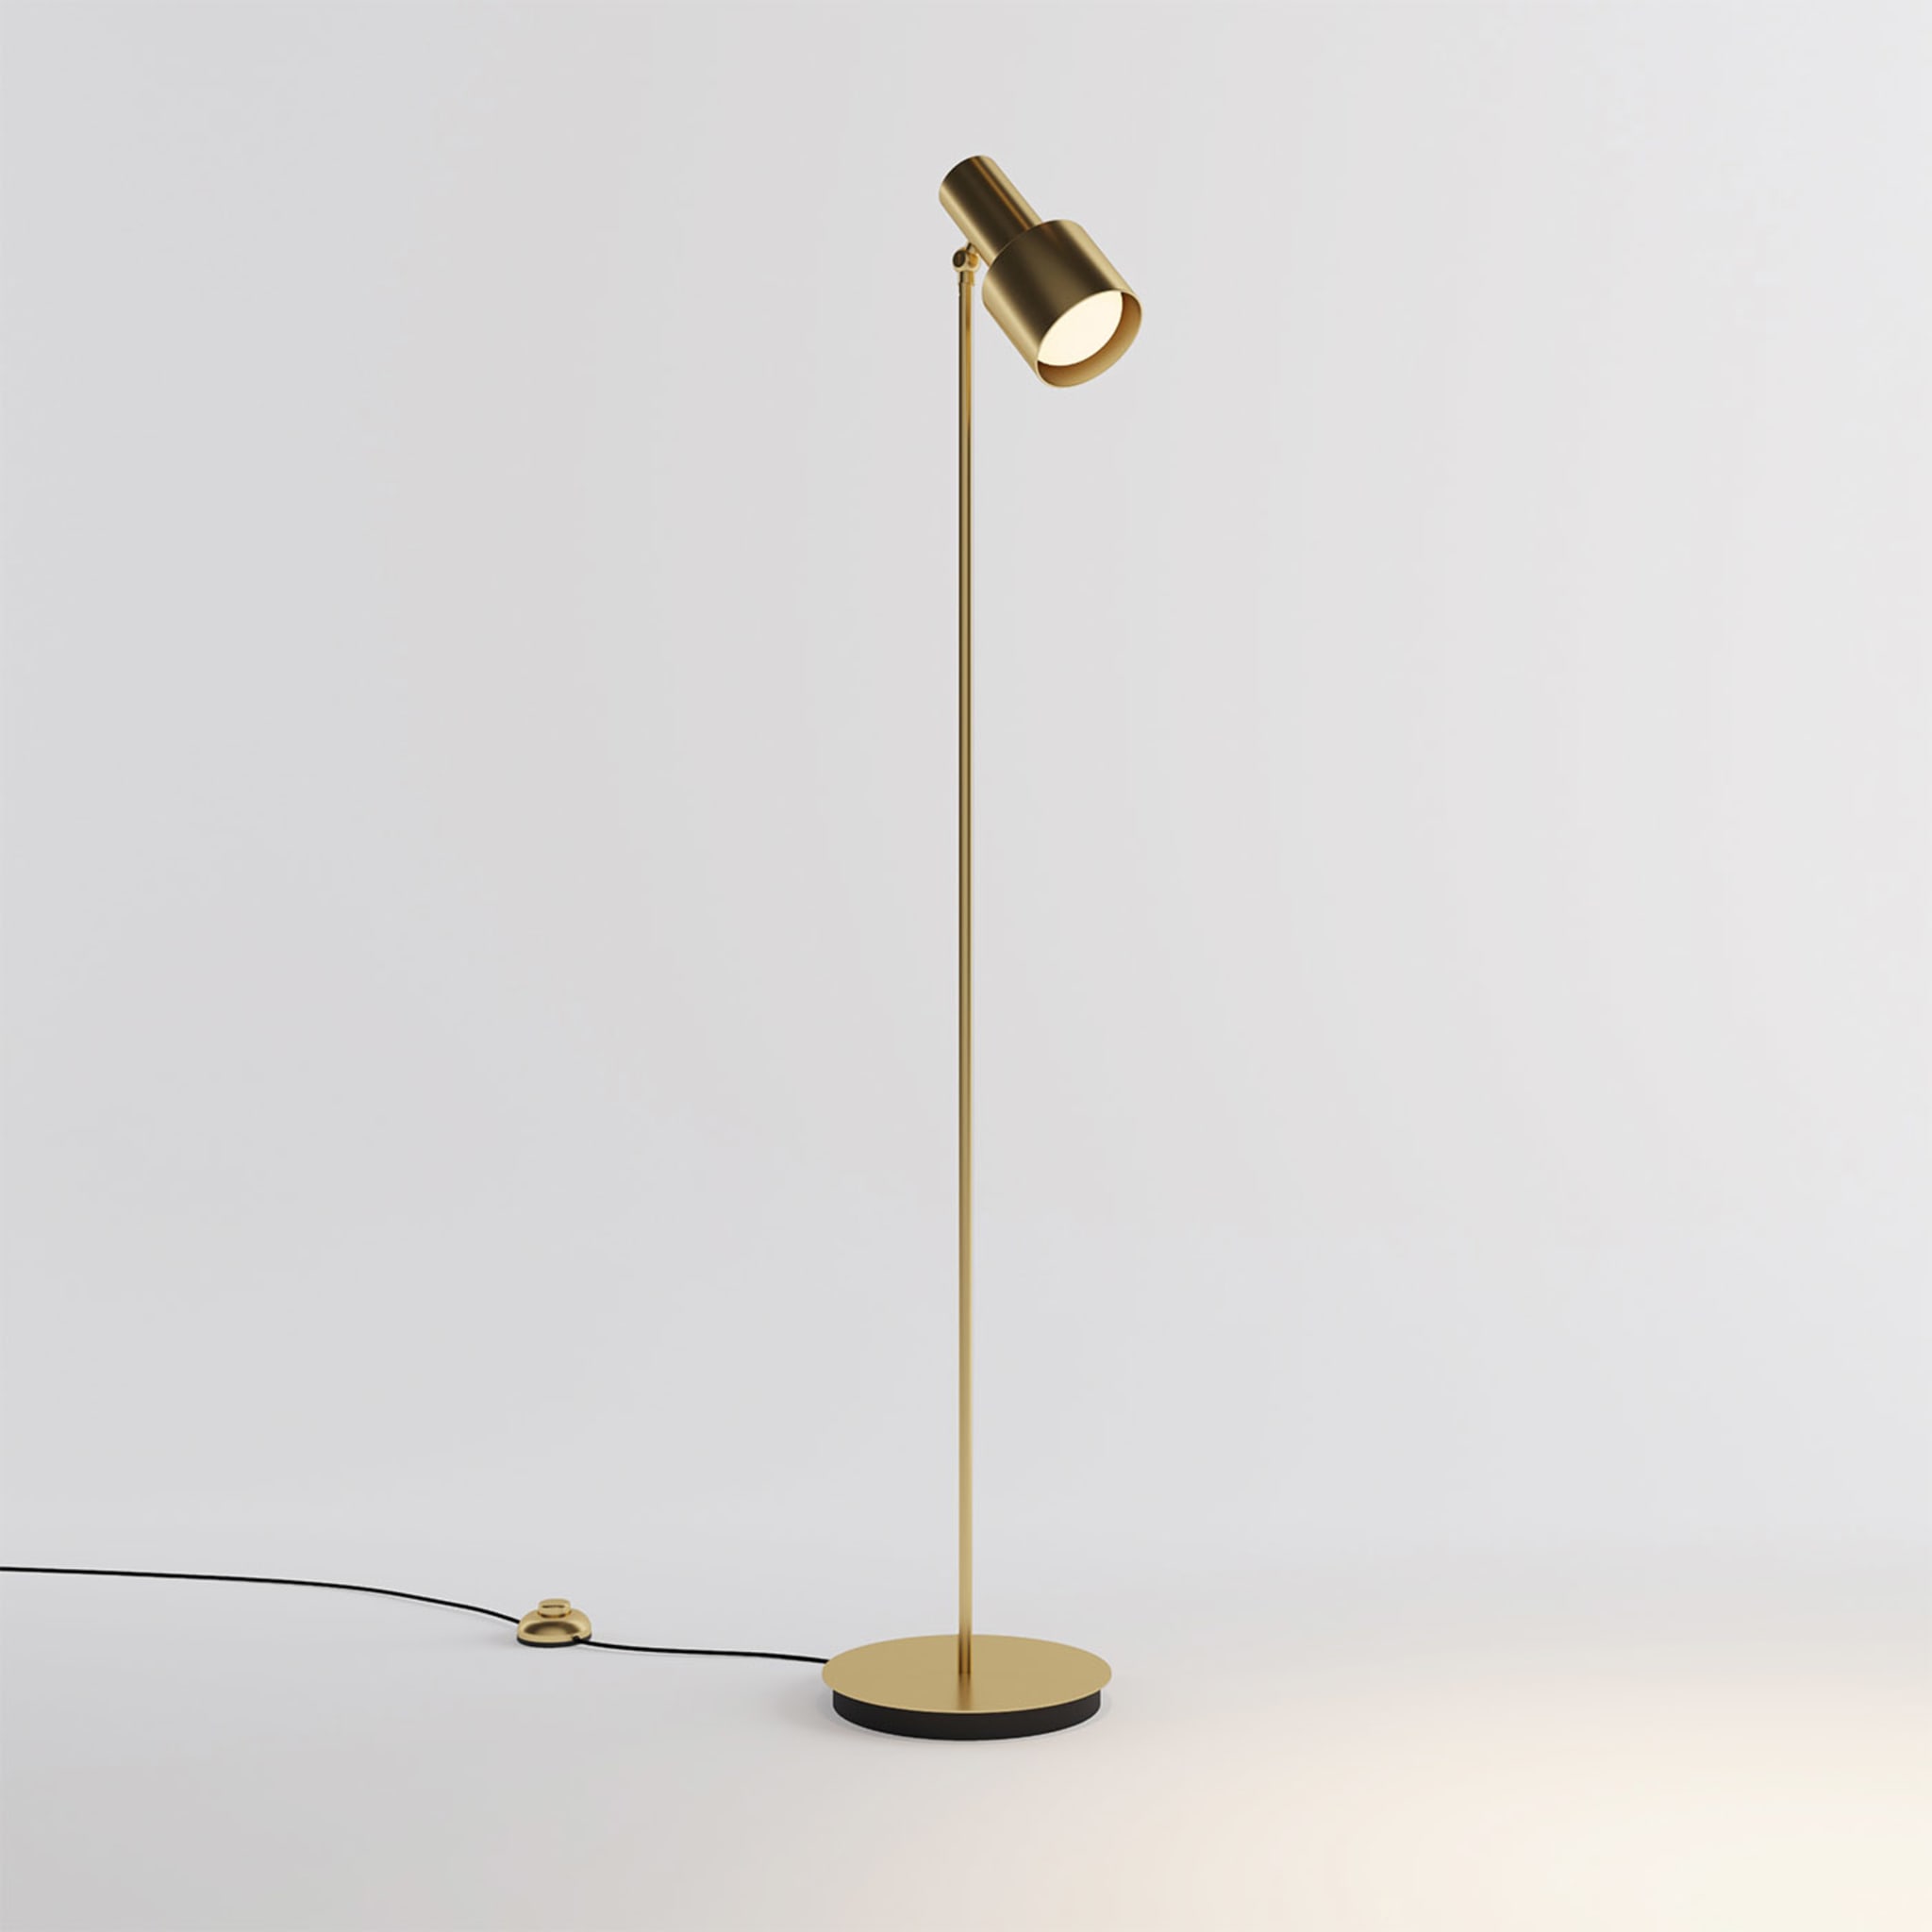 Light Gallery Luxury GP Bronzed Floor Lamp by Marco Pollice - Alternative view 1